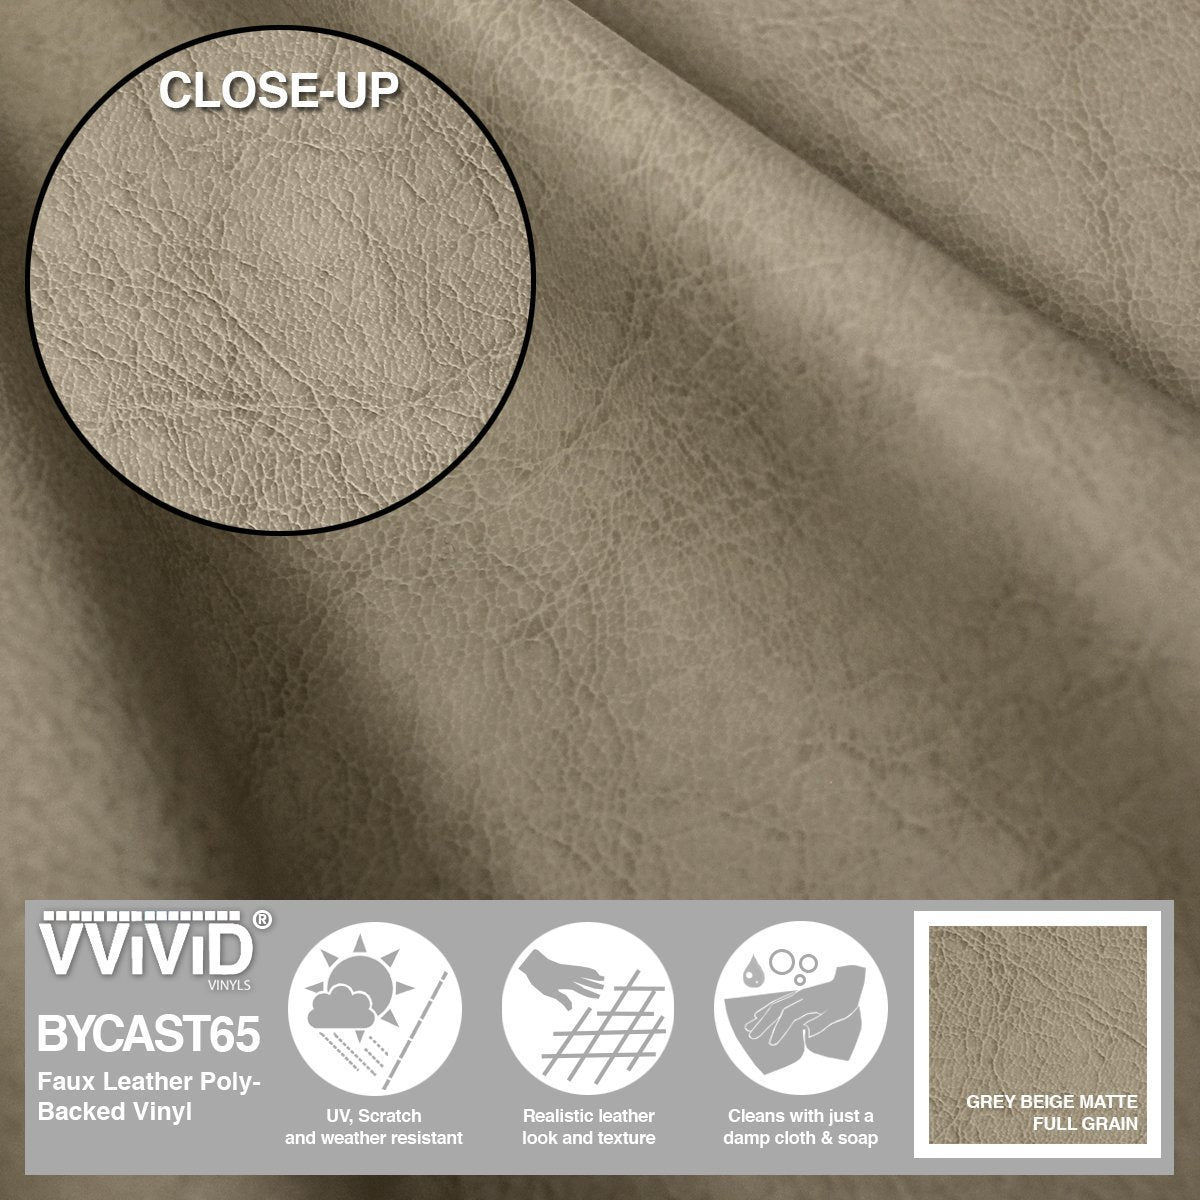 Bycast65 Grey Beige Matte Full-Grain Pattern Faux Leather Marine Vinyl Fabric - The VViViD Vinyl Wrap Shop